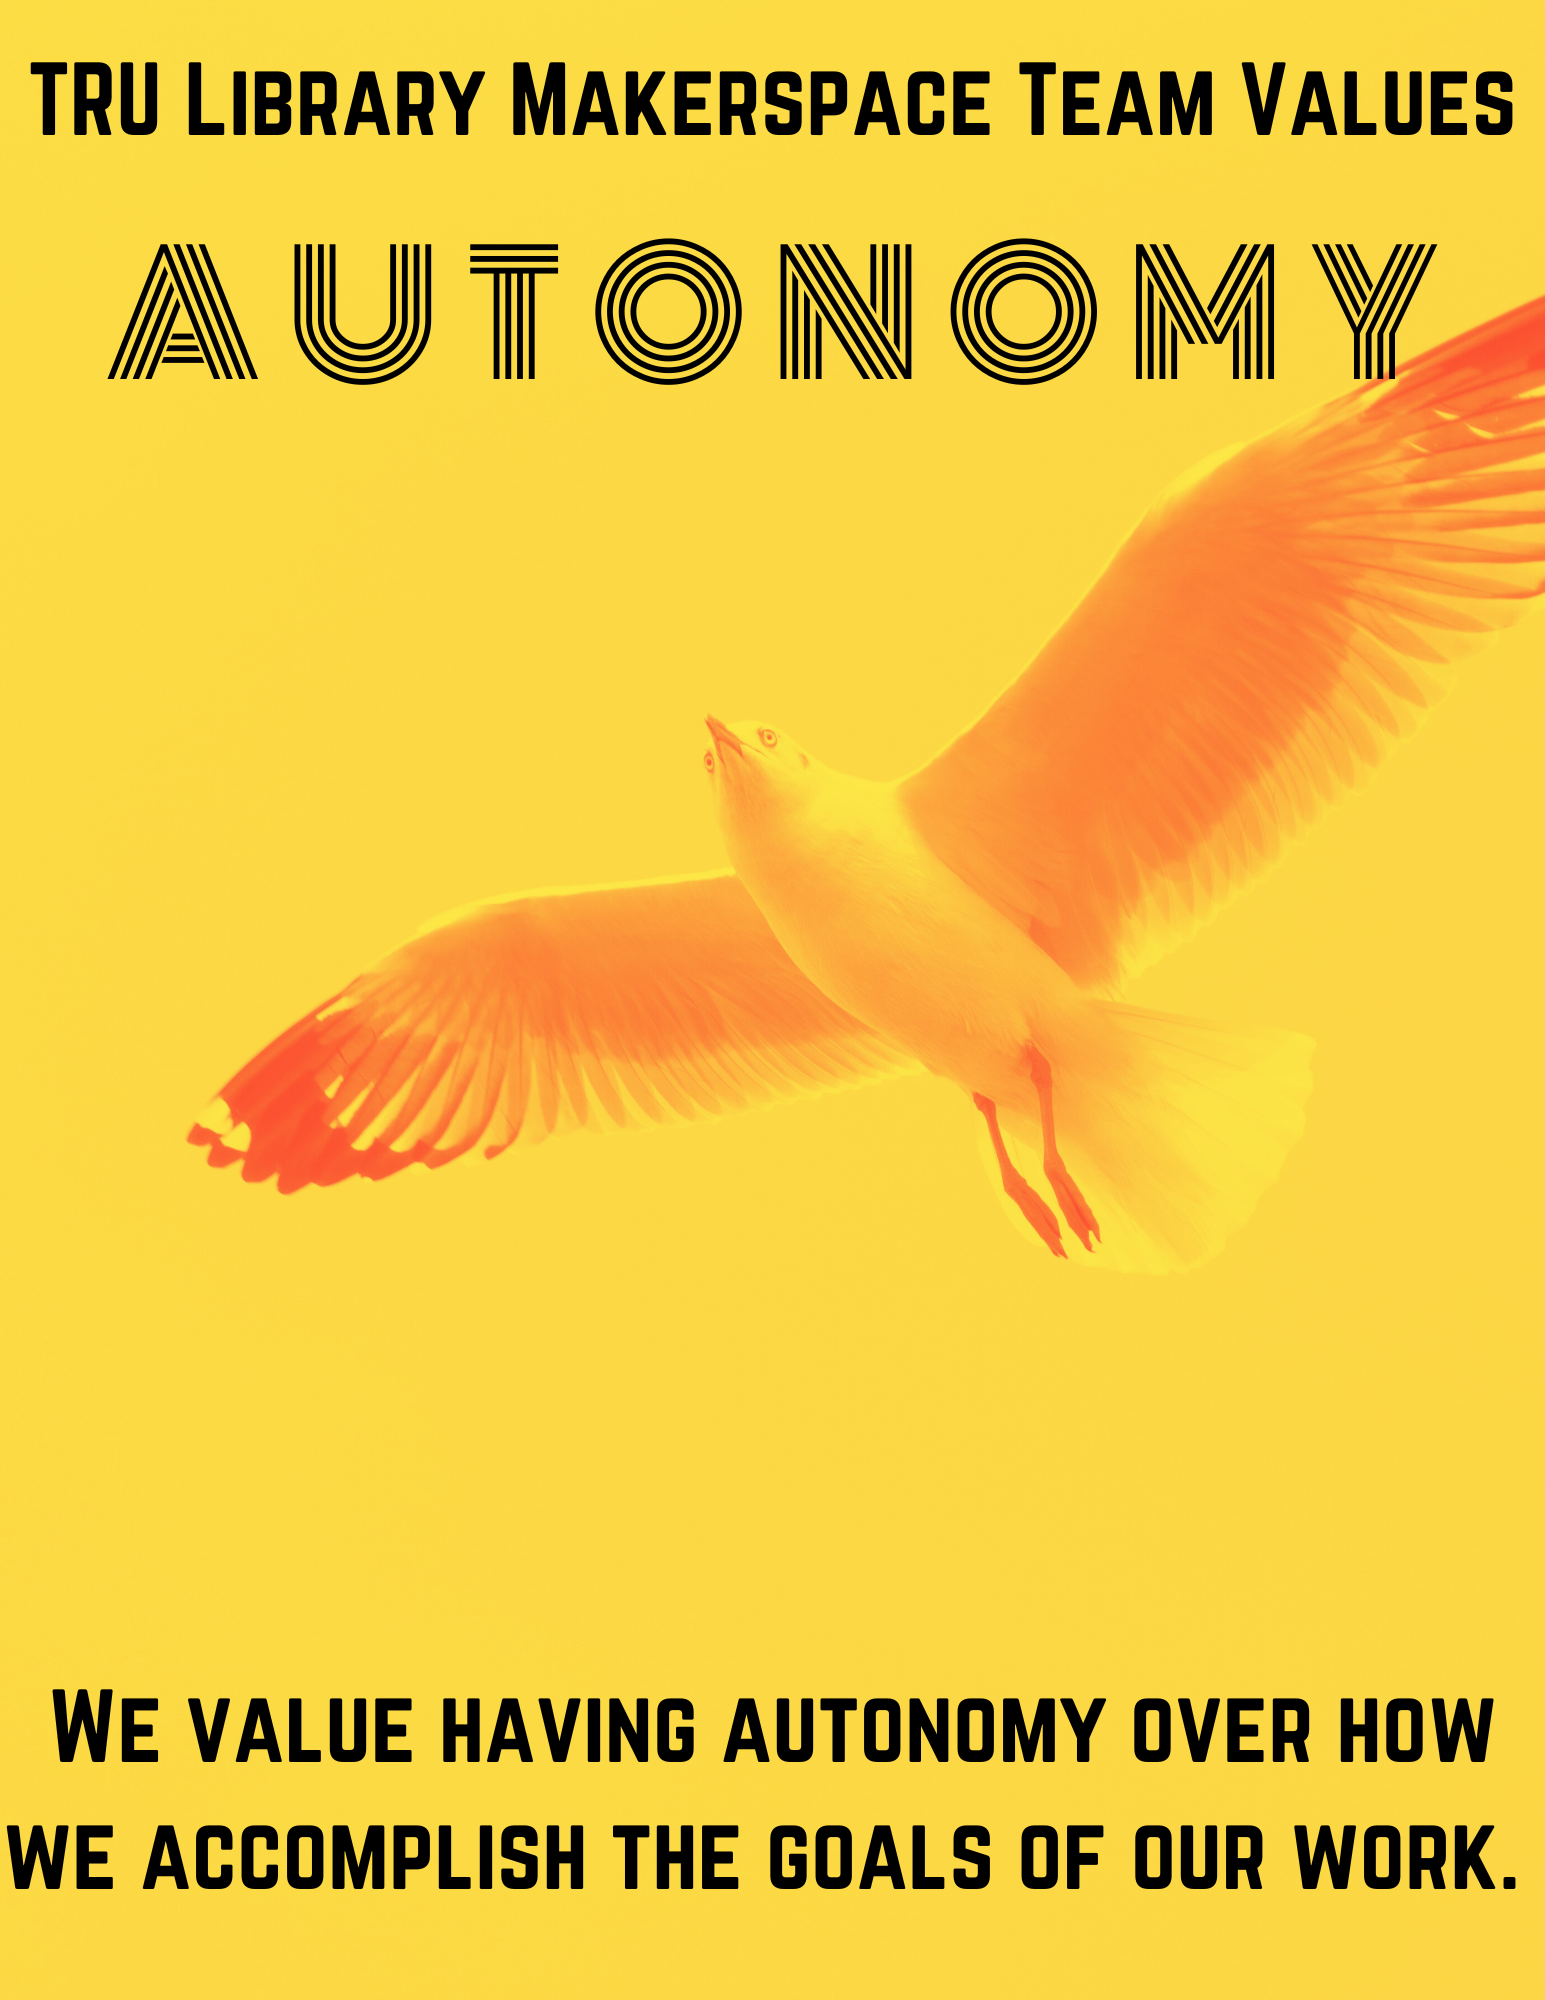 Autonomy: We value having autonomy over how we accomplish the goals of our work.